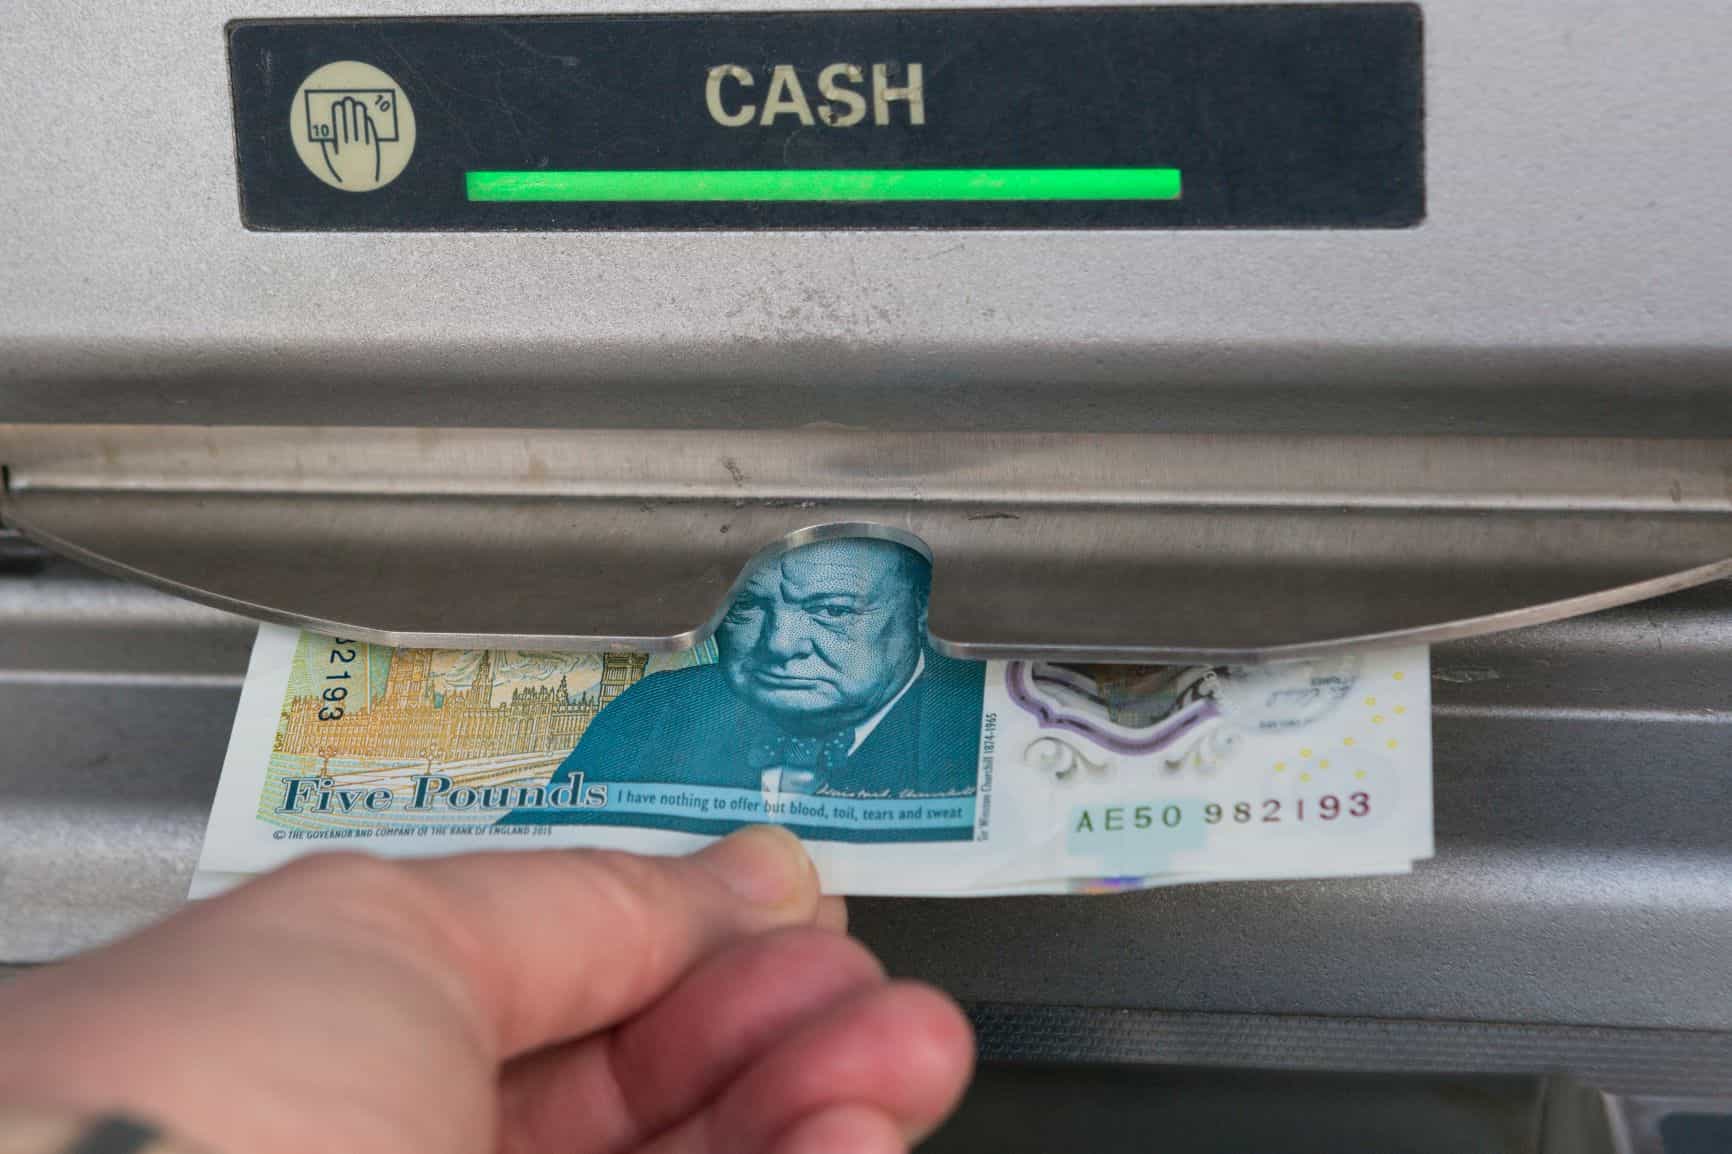 Cash machine and £5 note